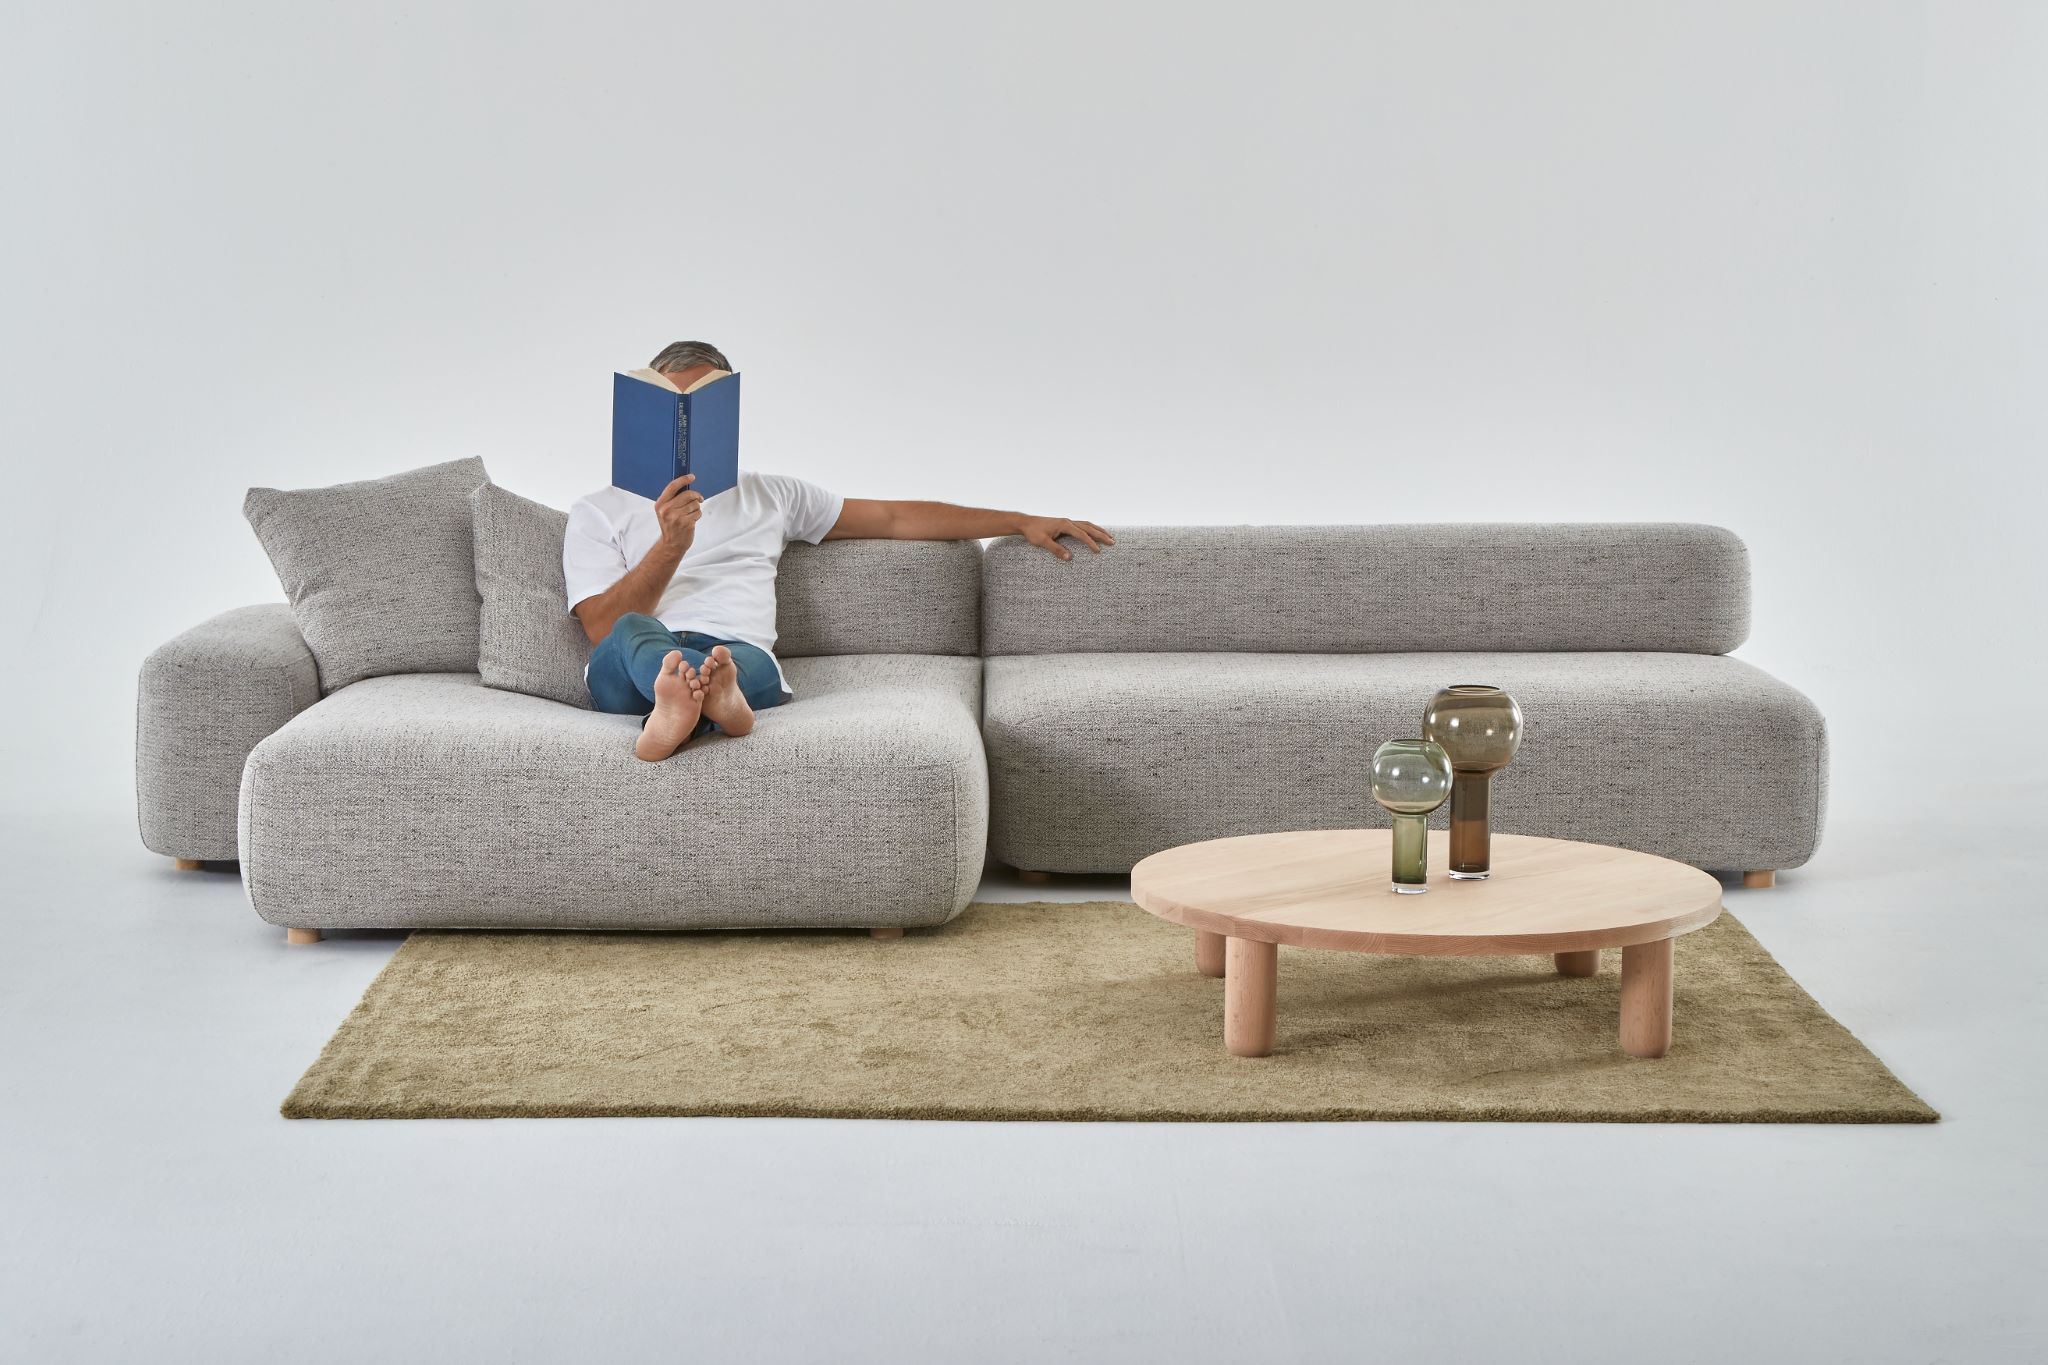 New Australian-made environmentally friendly furniture brand